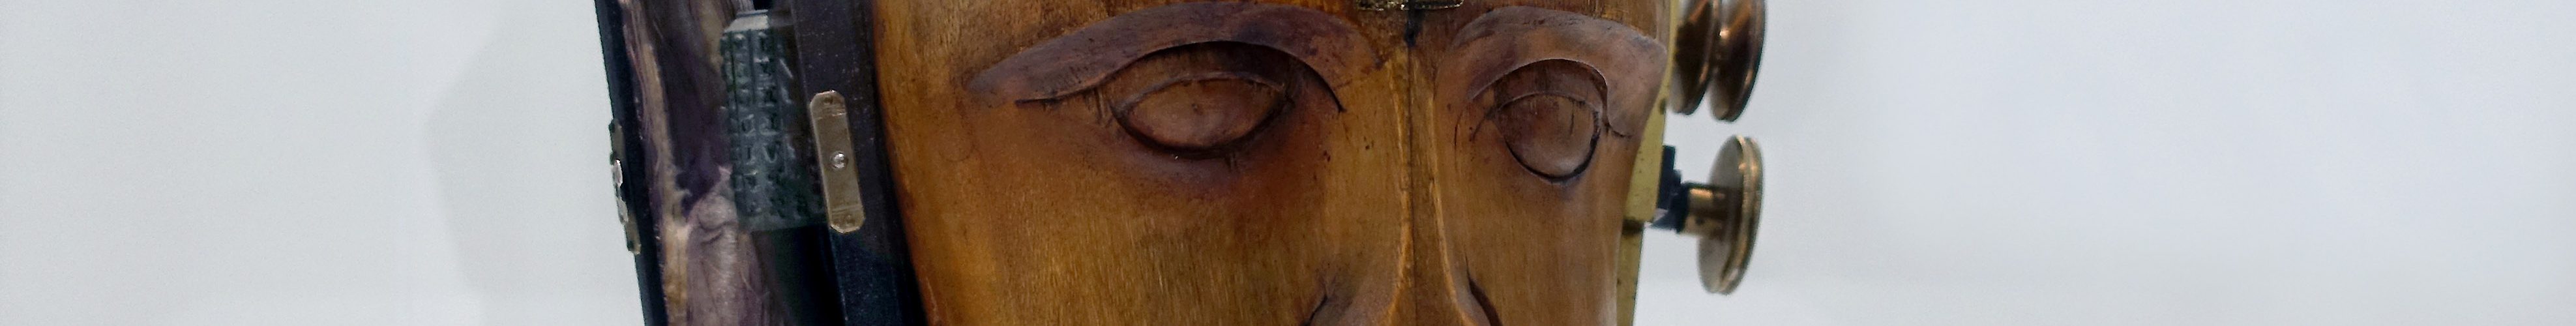 Raoul Hausmann, Spirit of the Age: Mechanical Head, 1919, wooden mannequin head with attached objects, 32.5 x 21 x 20 cm (Centre Pompidou, Musée National d’Art Moderne, Paris)